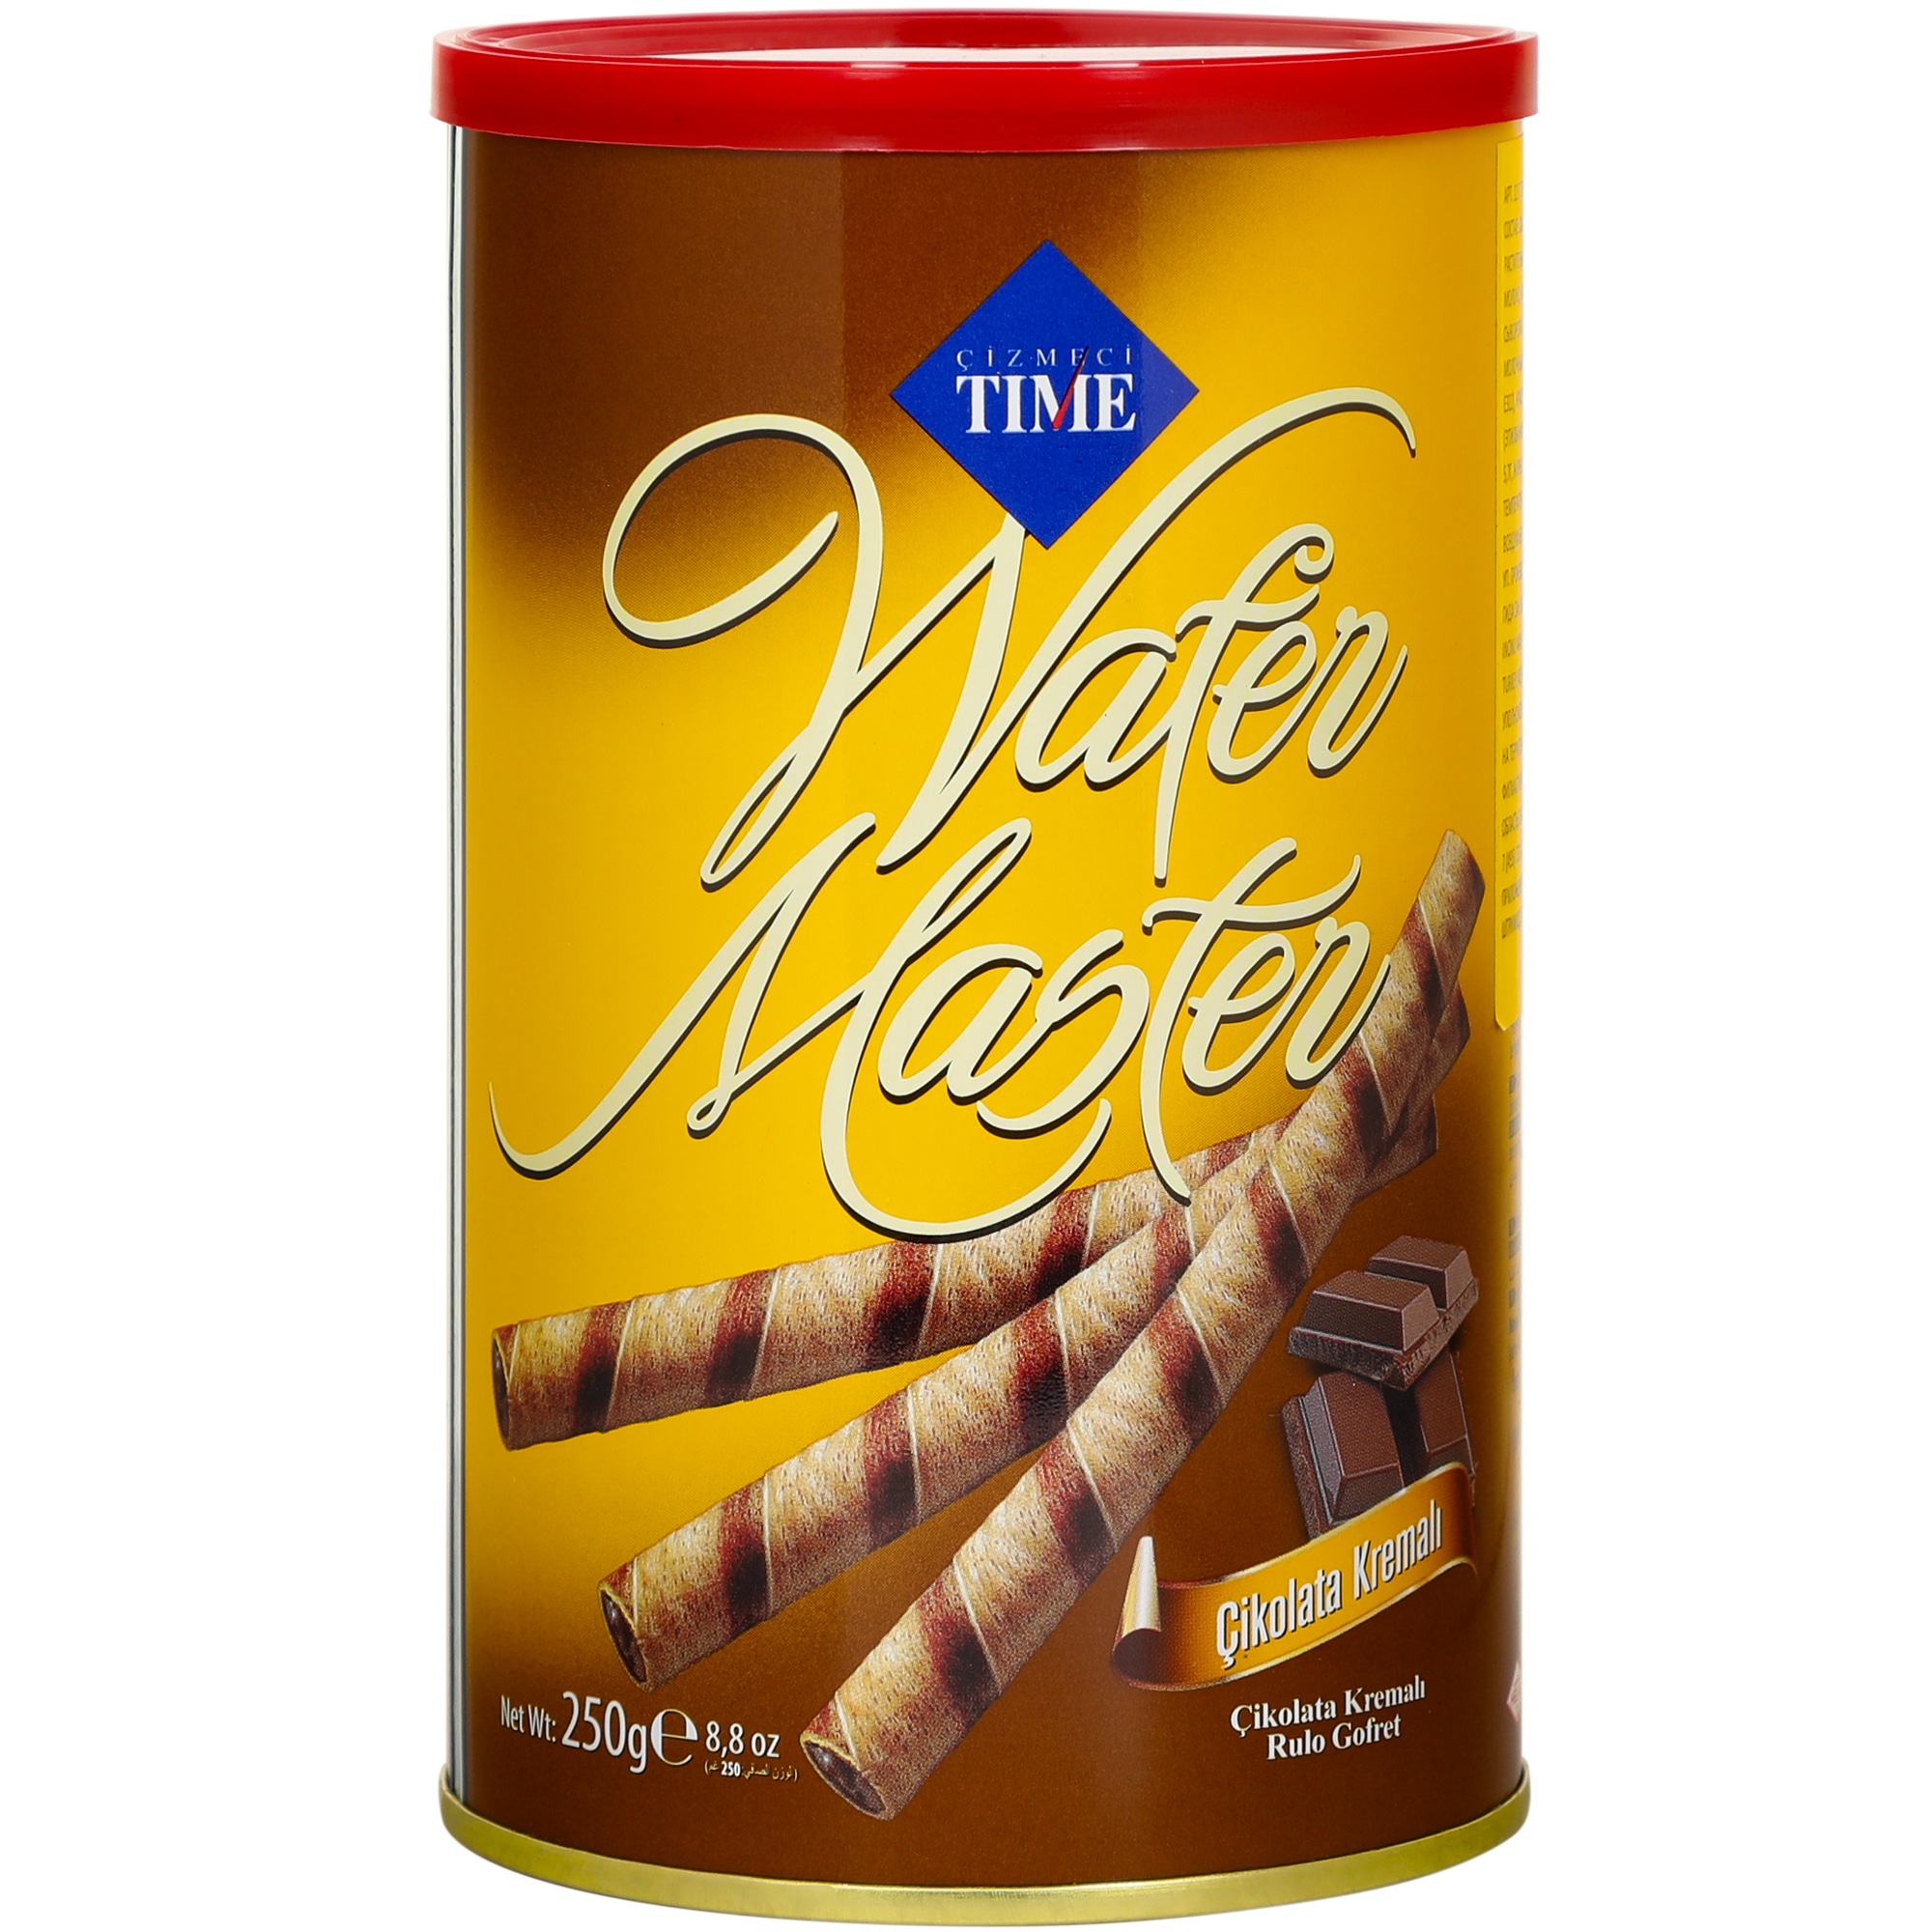 Трубочки Cizmeci Time вафельные wafer master шоколад, 250 г трубочки cizmeci time вафельные wafer master фундук 400 г